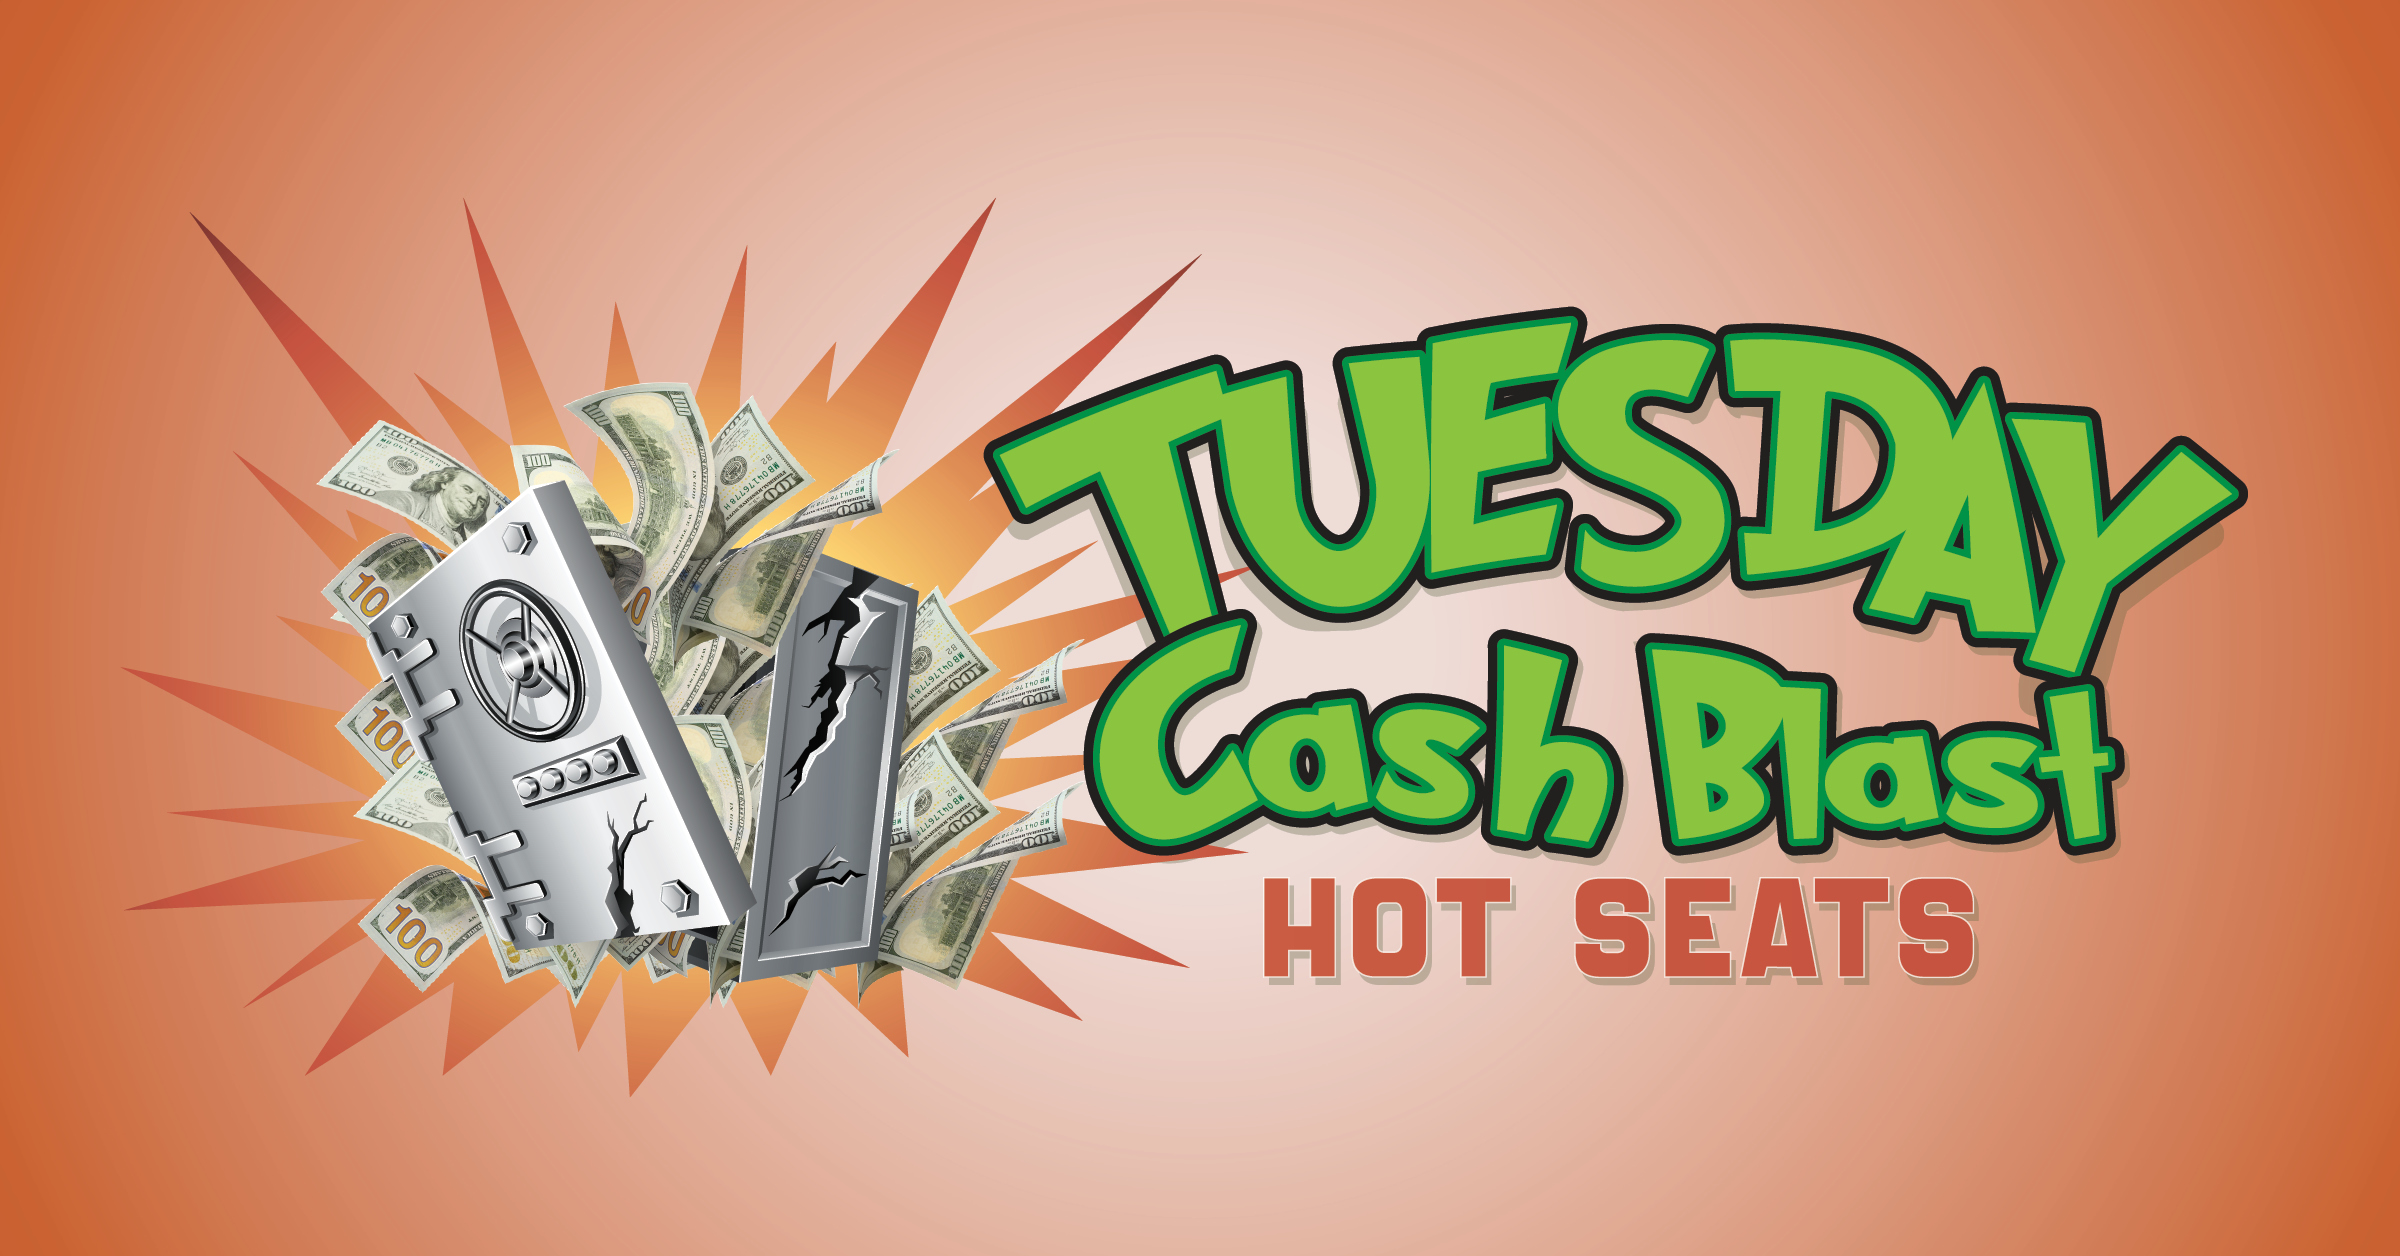 TUESDAY CASH BLAST HOT SEATS